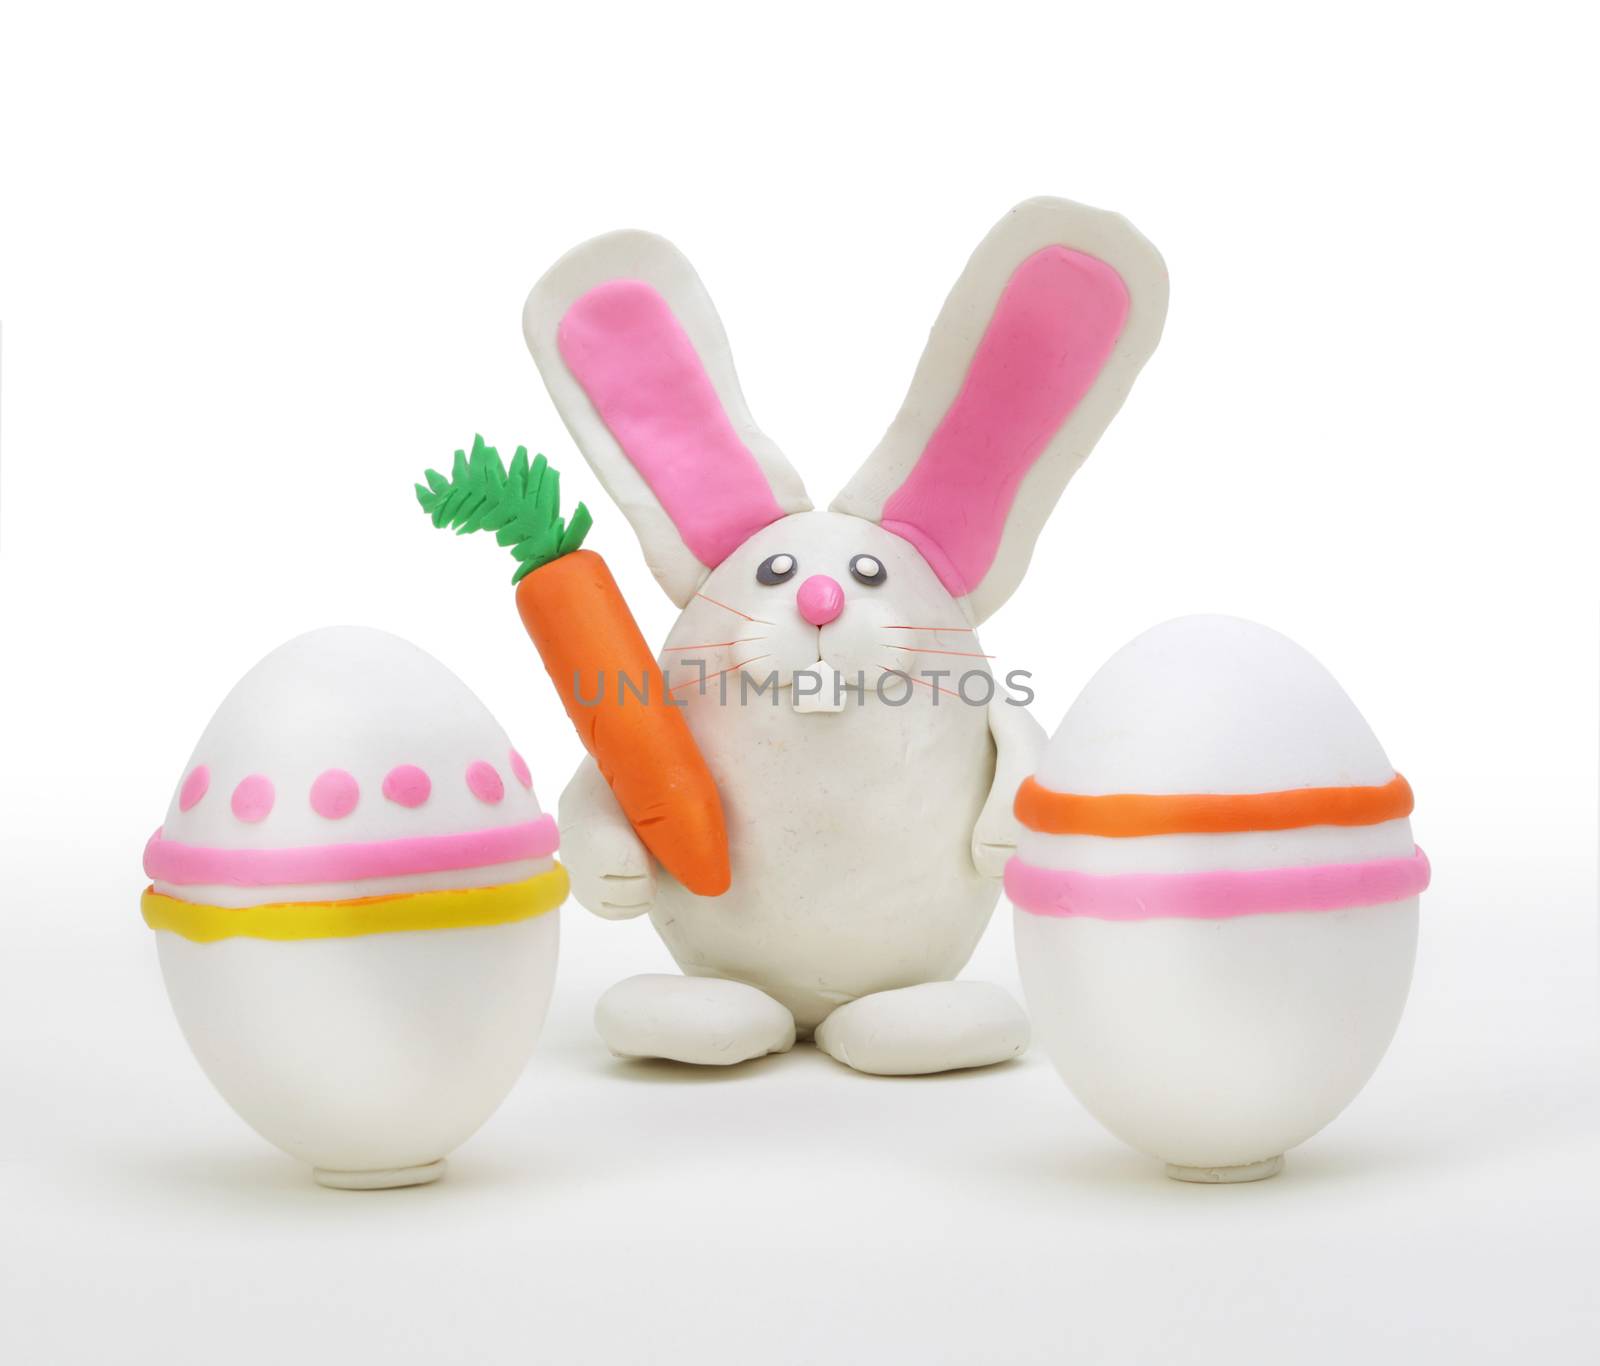 plasticine rabbit with easter egg by rudchenko